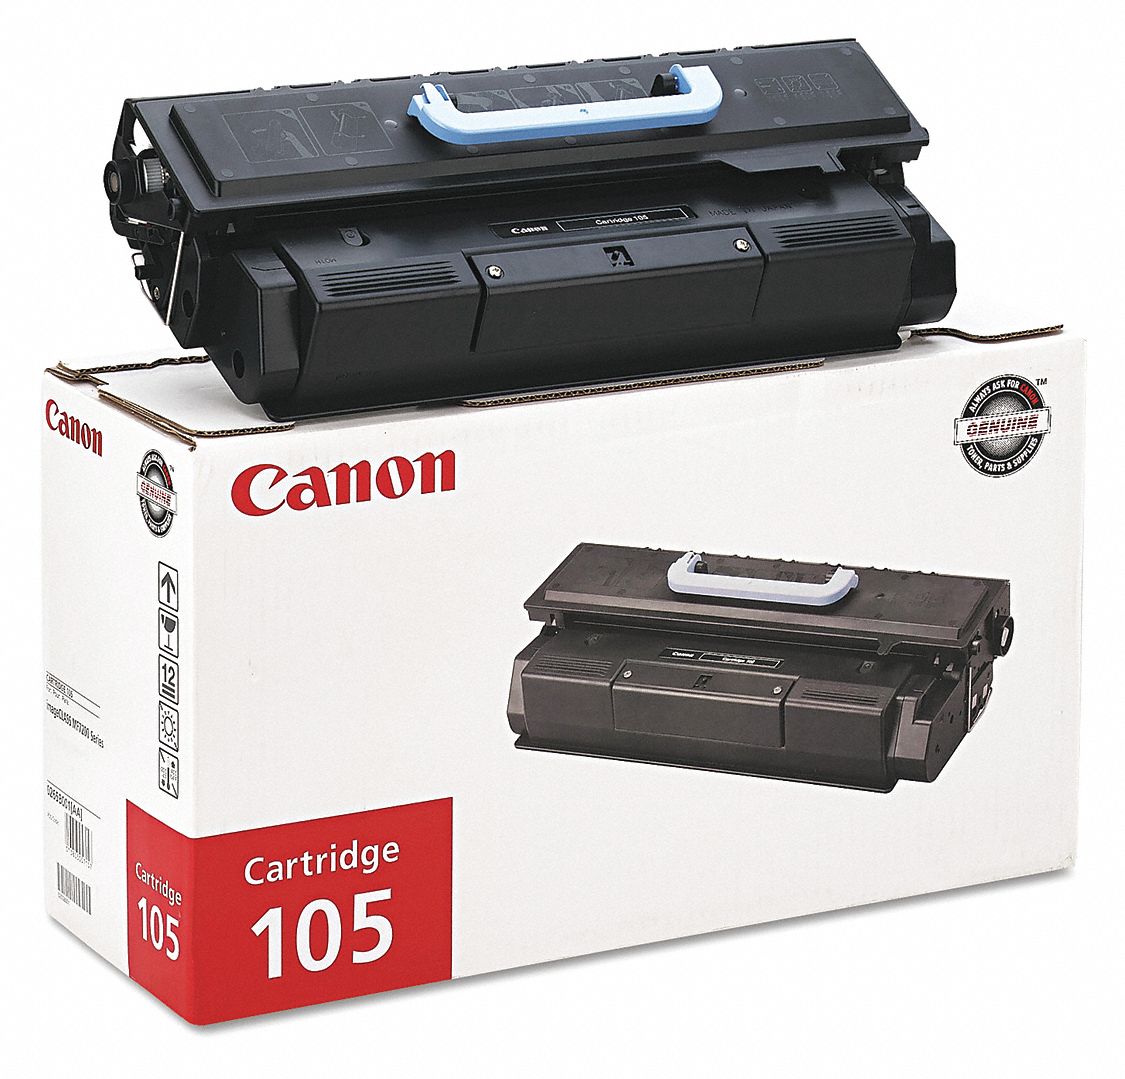 Toner Cartridge: 105, New, Canon, imageCLASS, Black